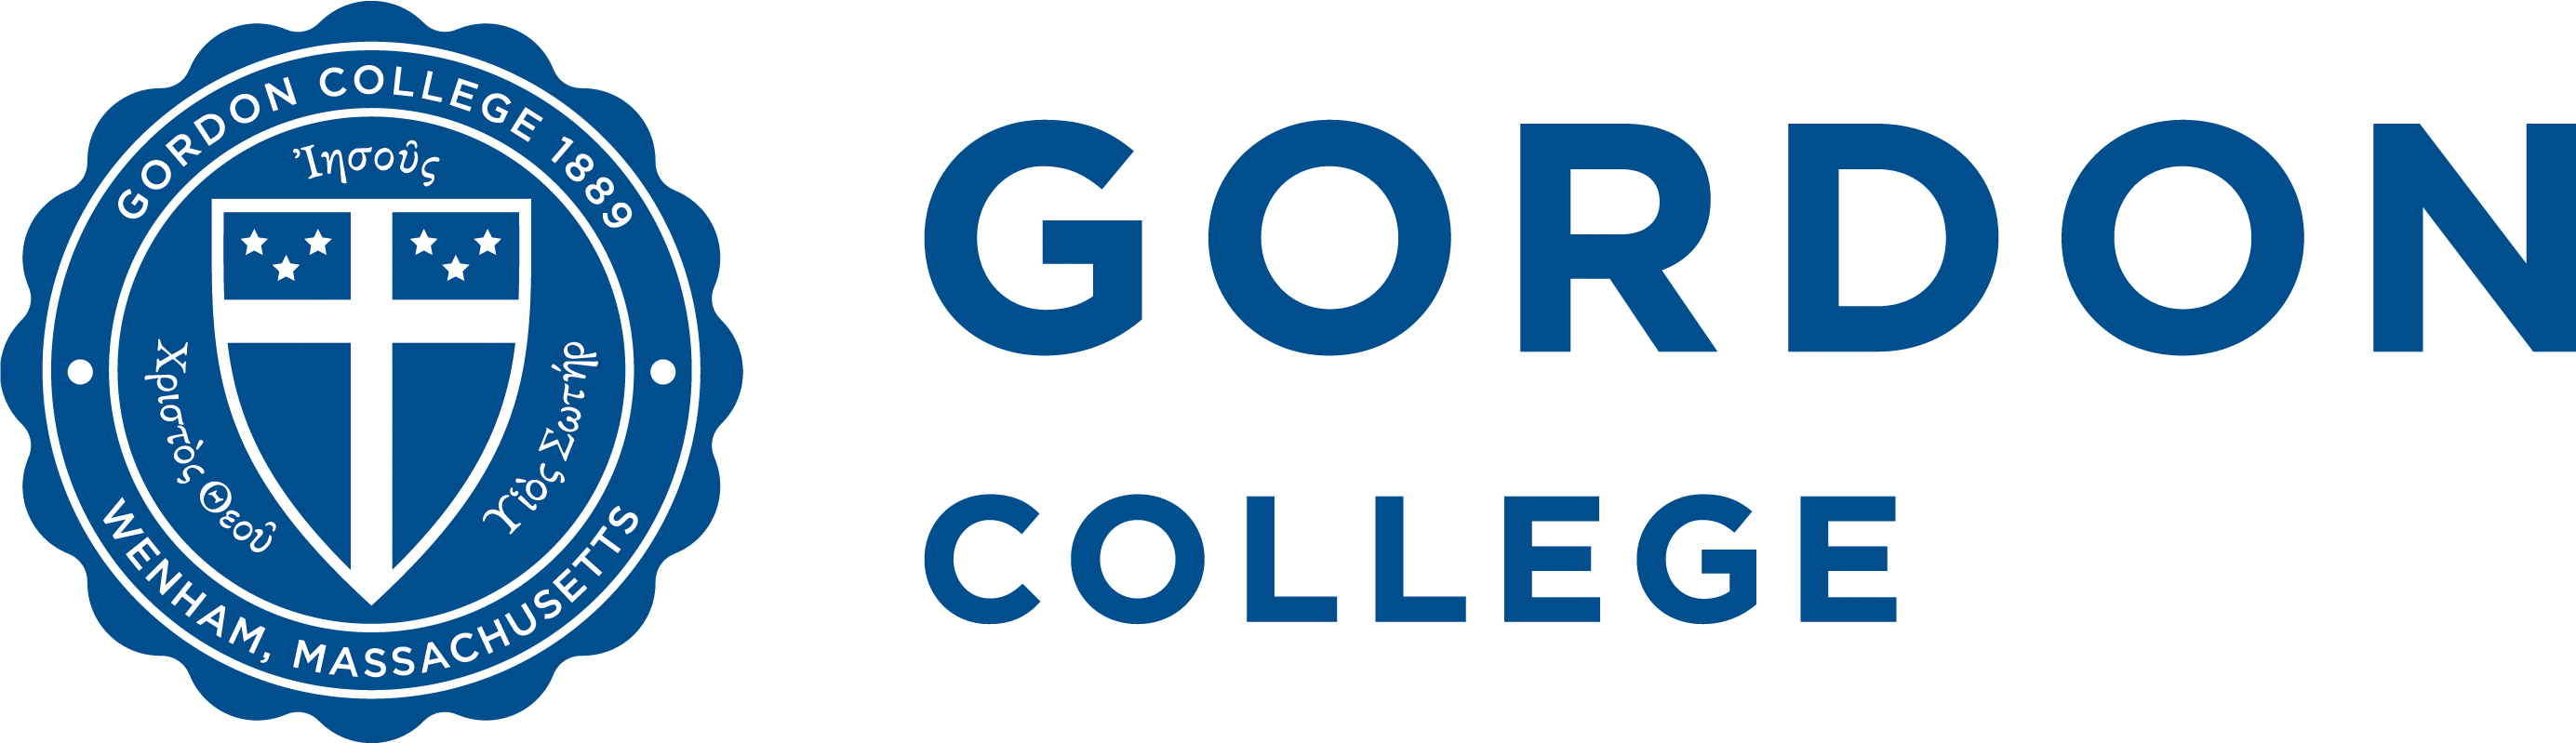 Image: Gordon College logo